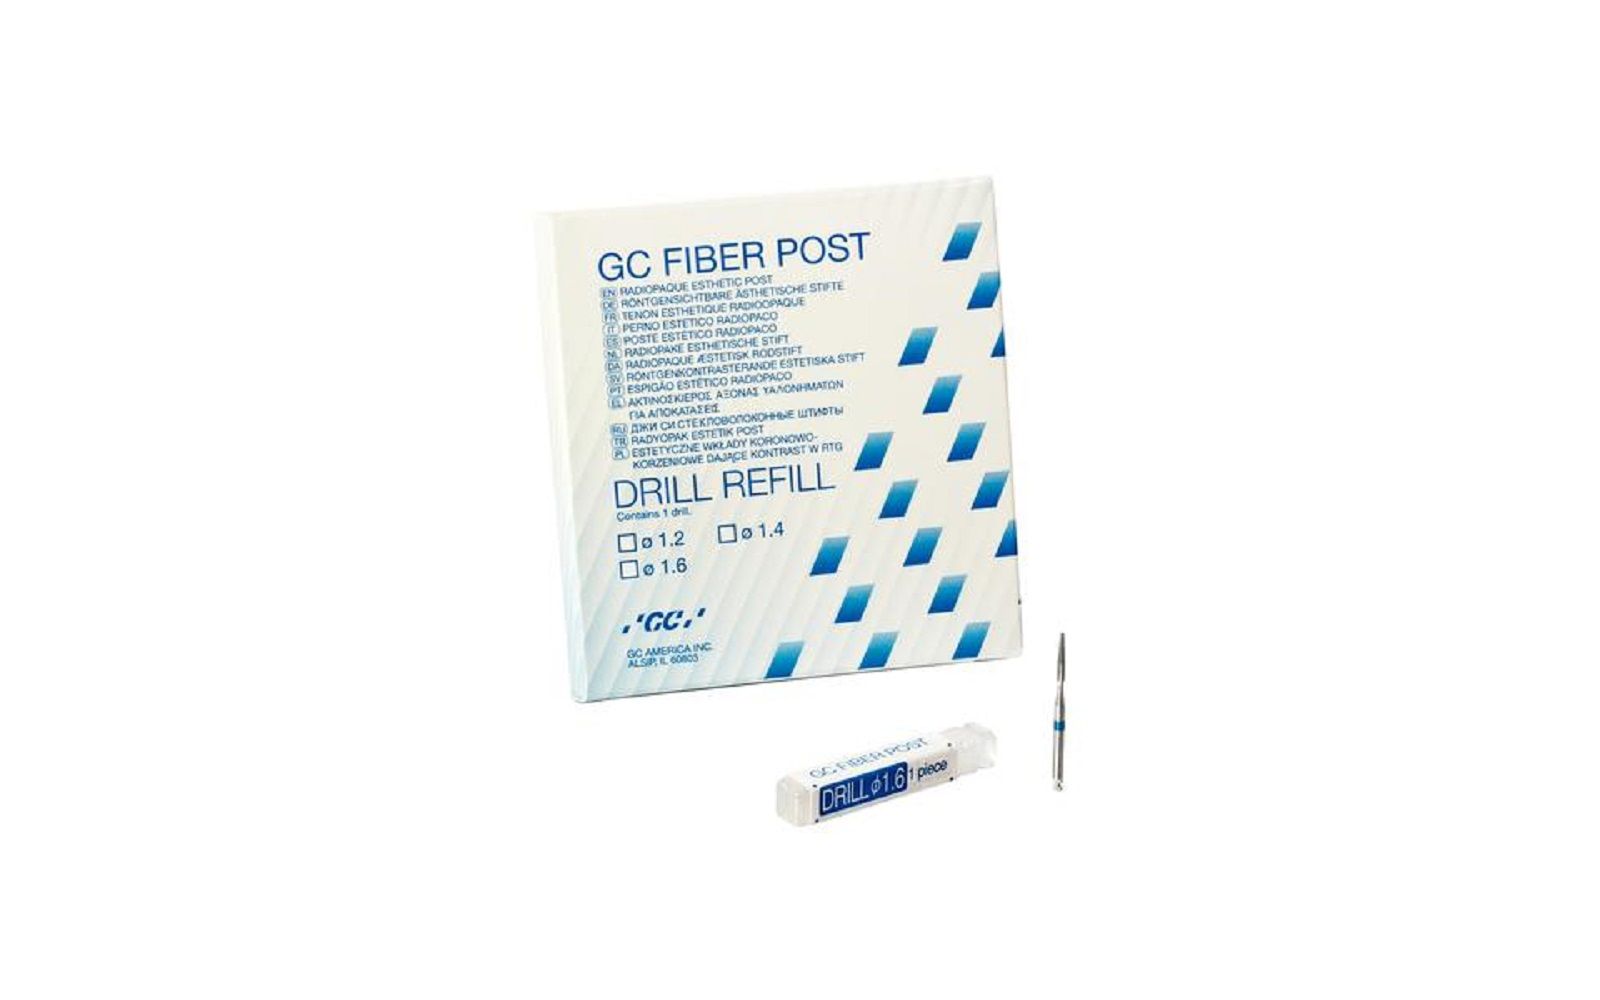 Gc fiber post drills, refill - gc america inc